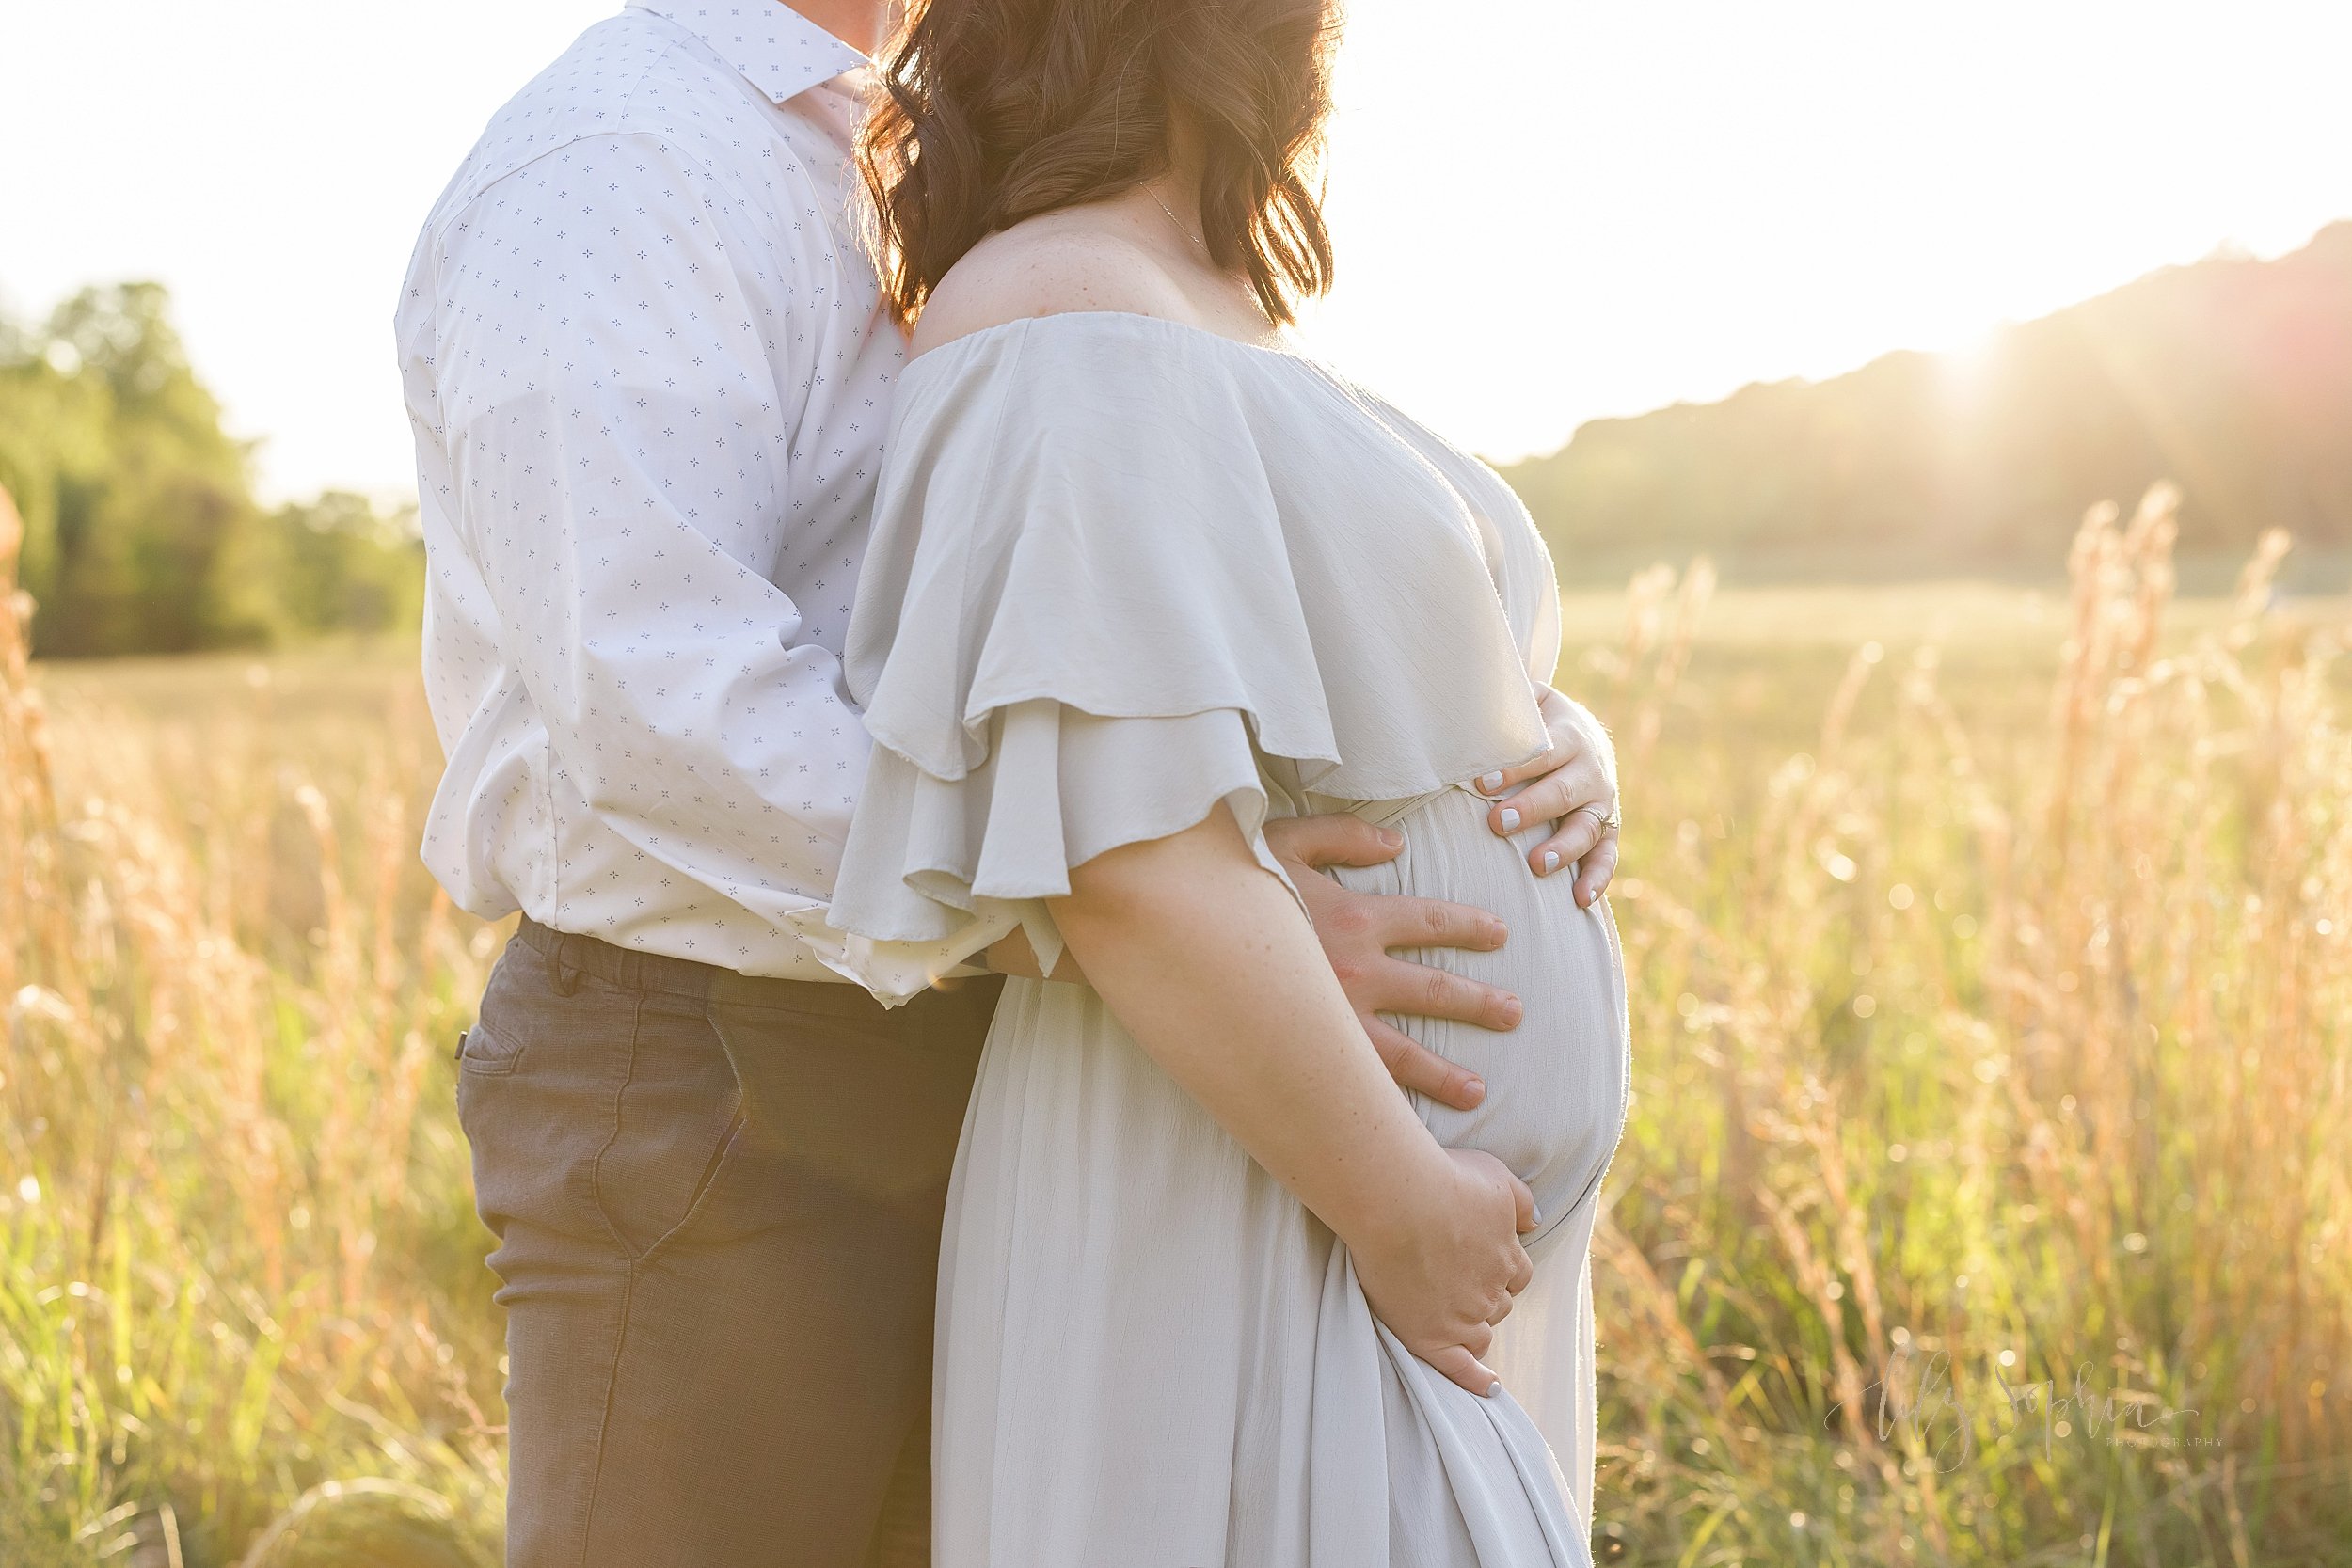 atlanta-pregancy-photos-couples-expecting-baby-girl-outdoor-portraits-maternity-photoshoot-buford-lawrenceville-oakhurst-decatur-kirkwood--brookhaven-buckhead-smyrna-grant-park-midtown-virginia-highlands_9157.jpg